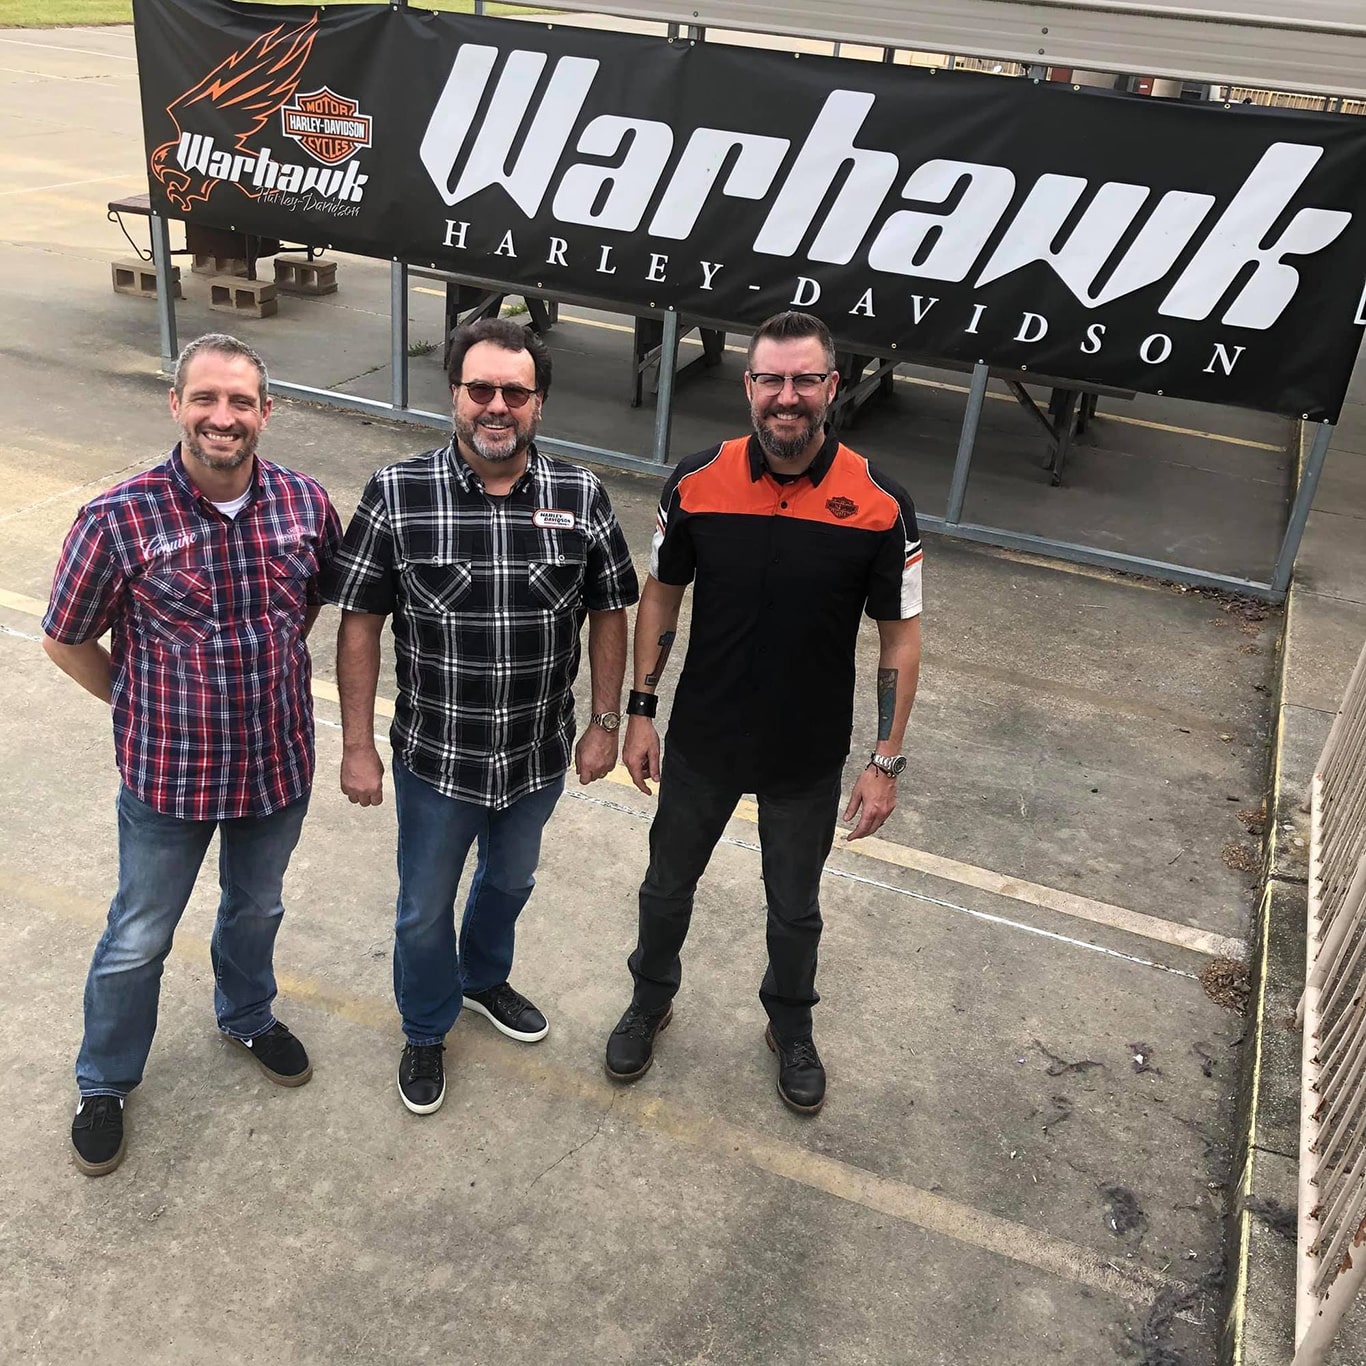 Image of Warhawk Harley Davidson staff members